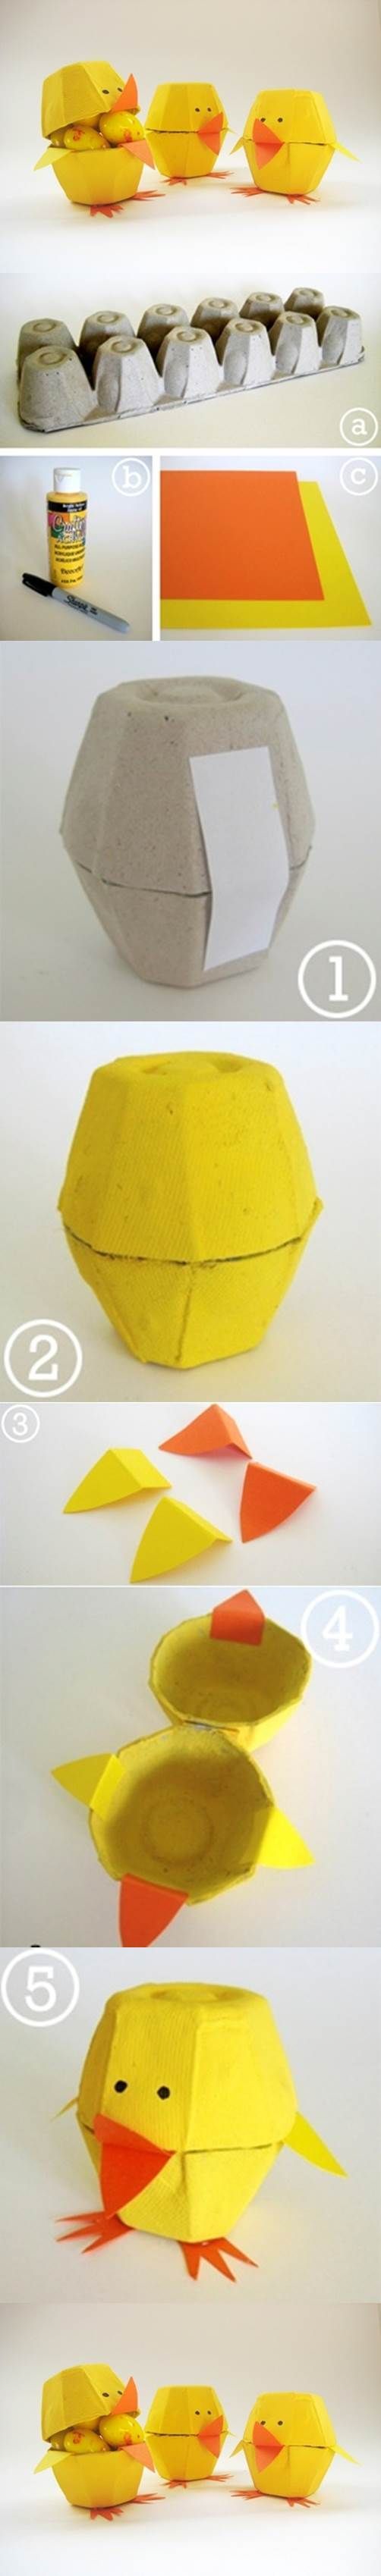 Egg Carton Craft – Lovely Chicks | iCreativeIdeas.com Like Us on Facebook == www.facebook.com/…